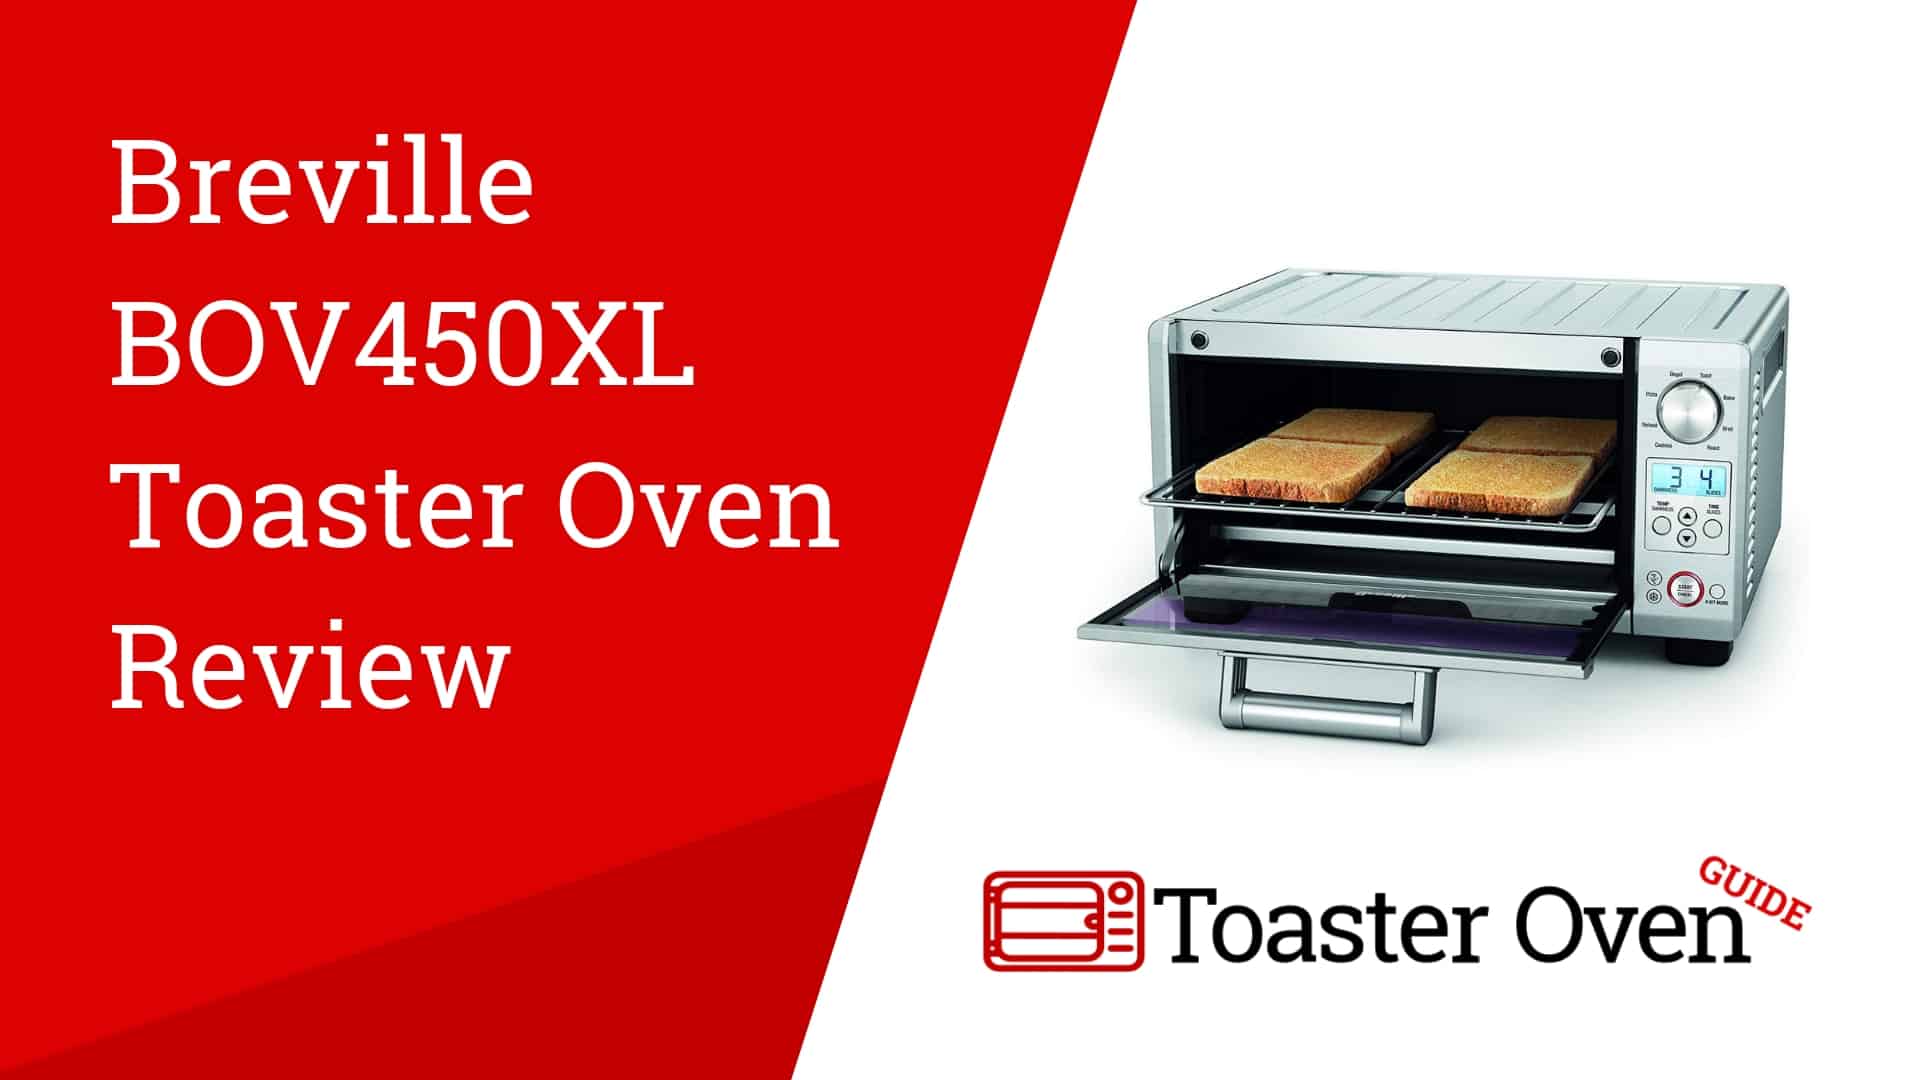 Breville SmartToaster 4-Slice Toaster + Reviews